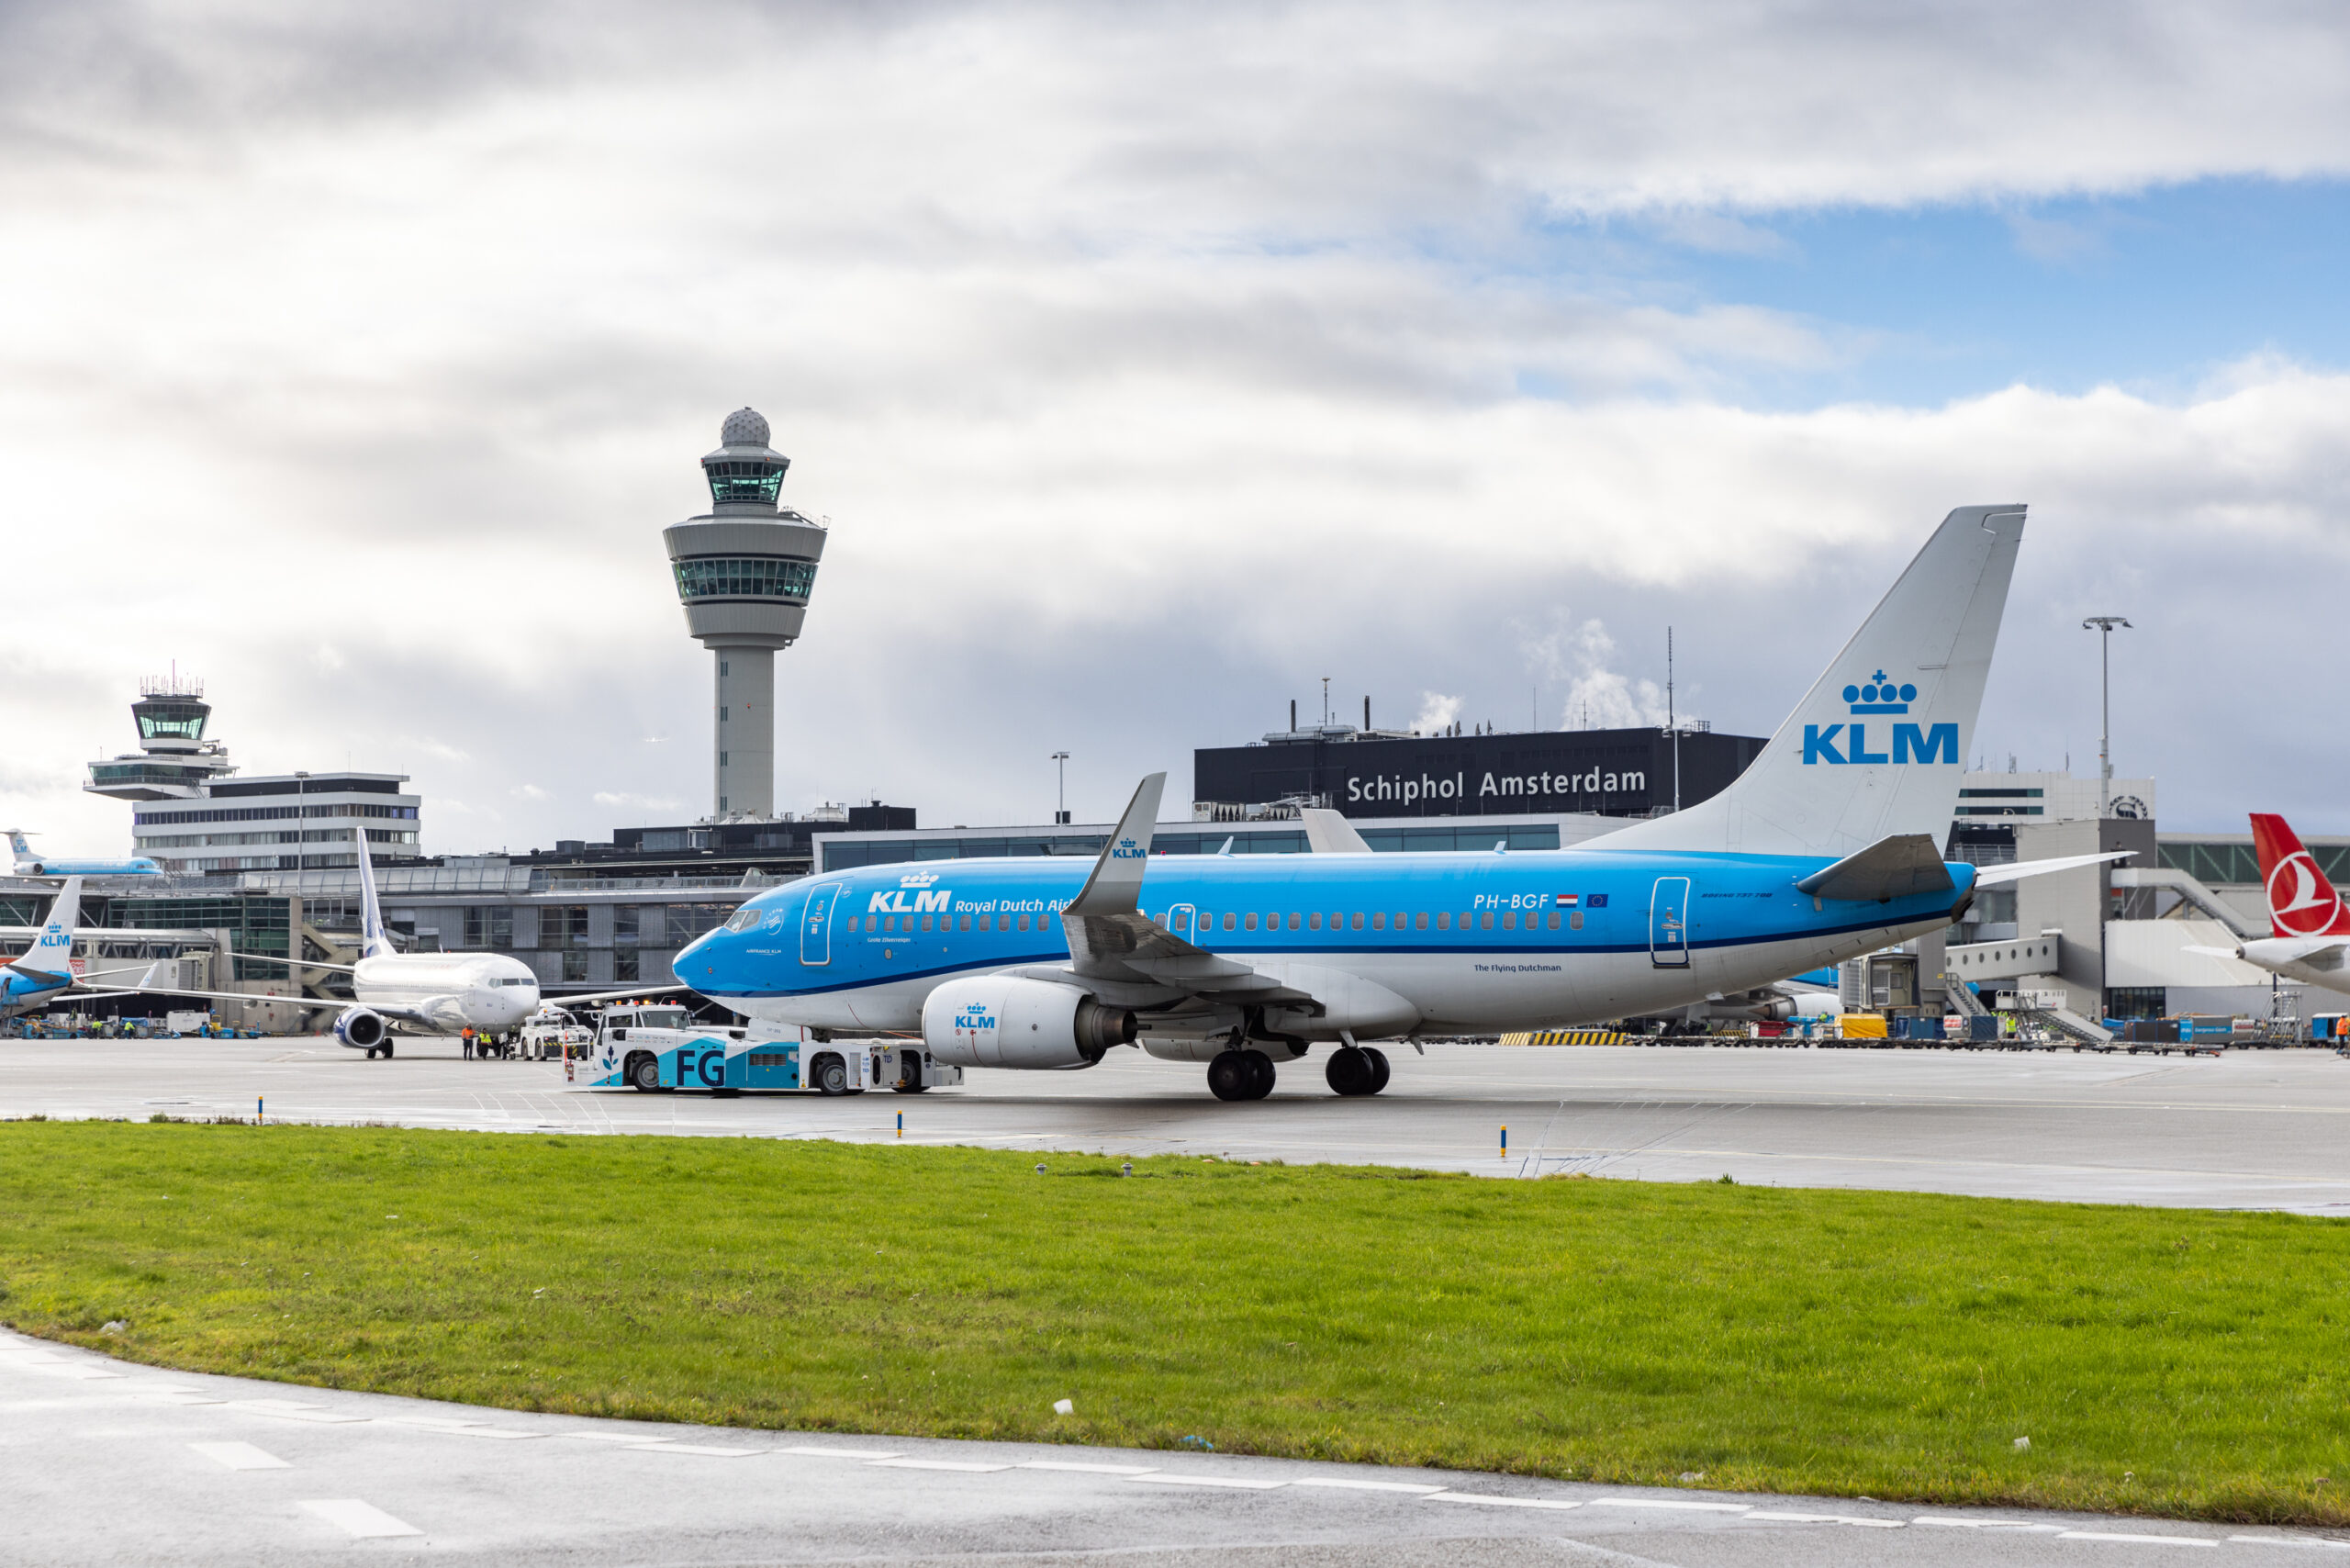 KLM aircraft at Schiphol Airport ©